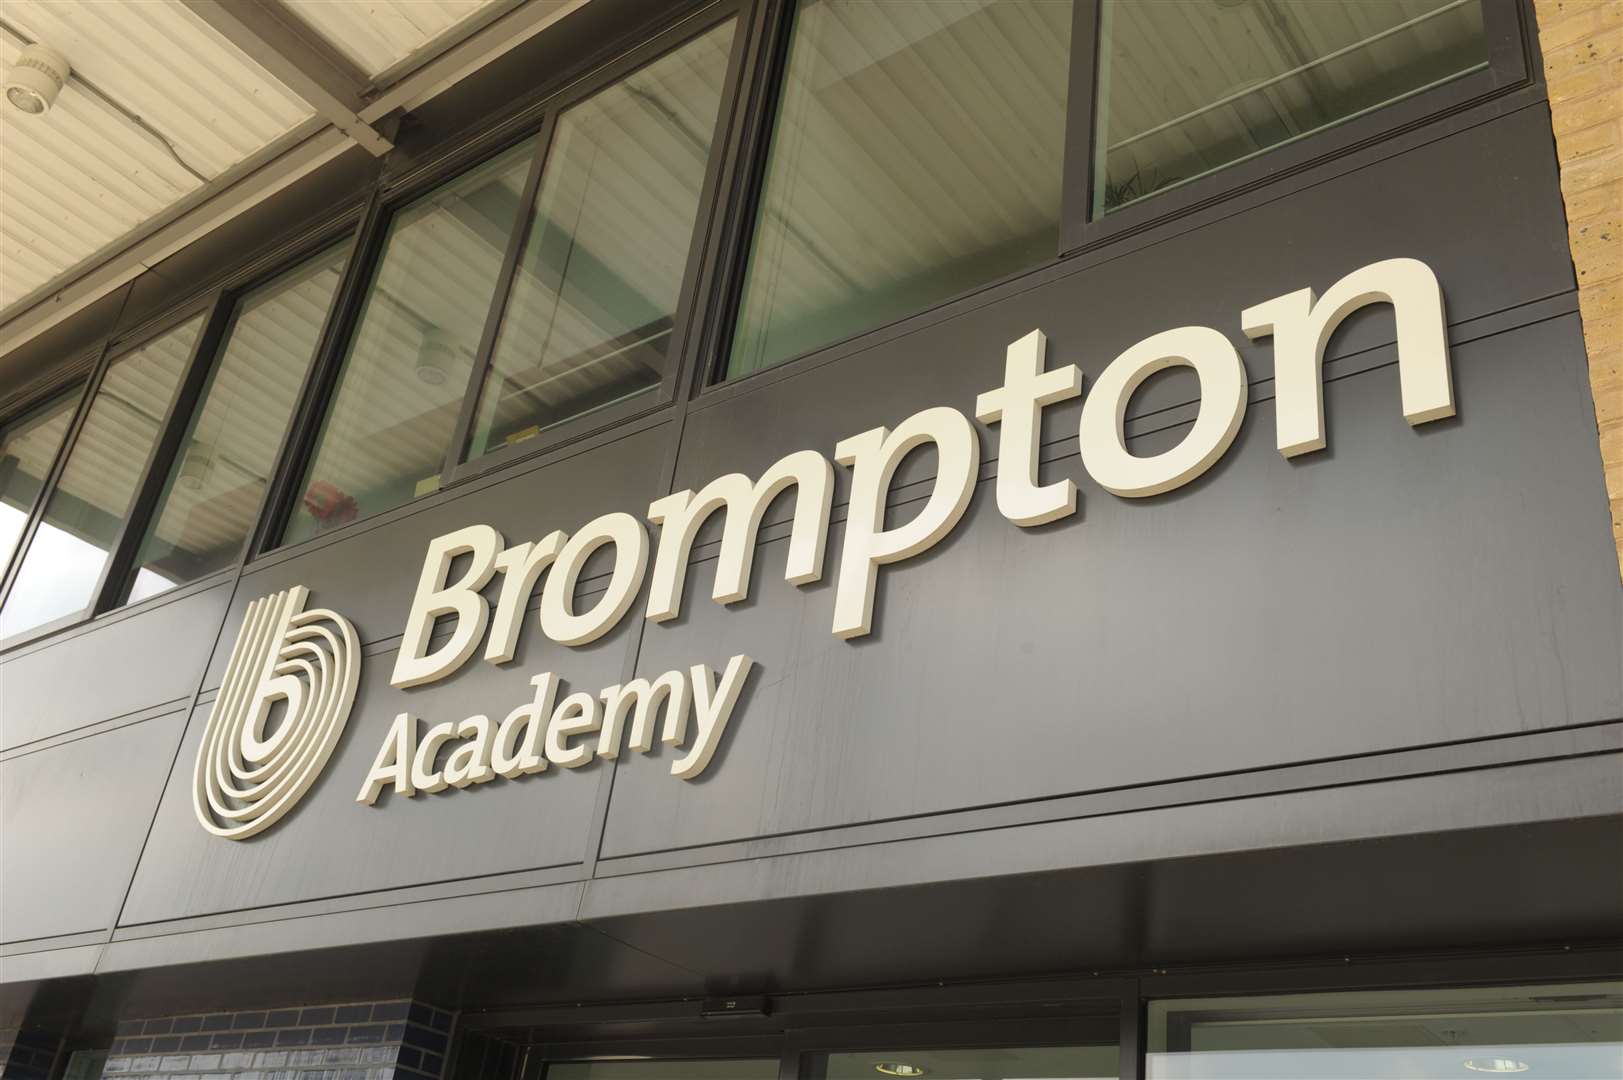 The children attend Brompton Academy in Marlborough Road, Gillingham